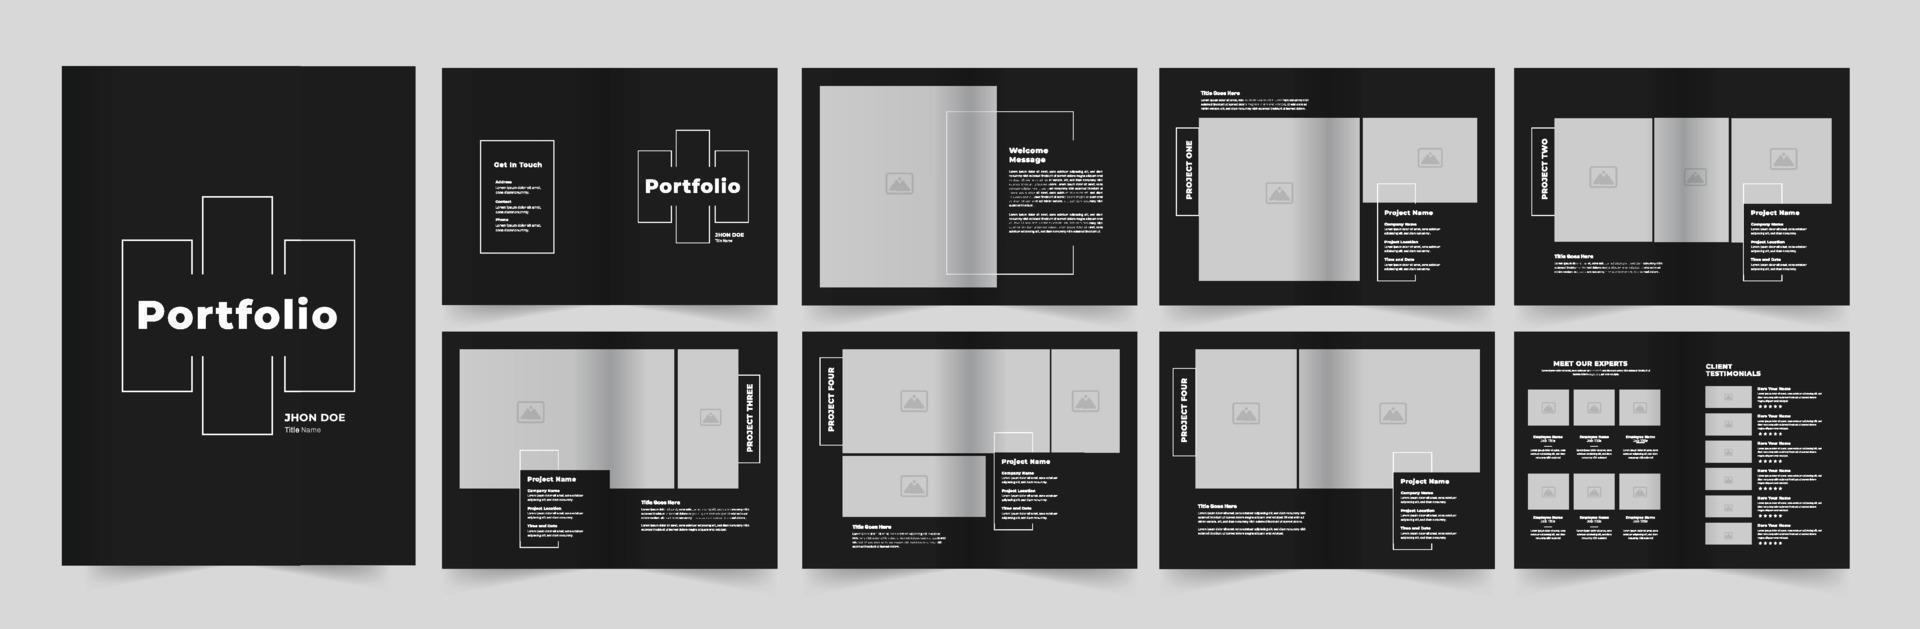 Portfolio Design die Architektur Portfolio Innere Portfolio Design vektor